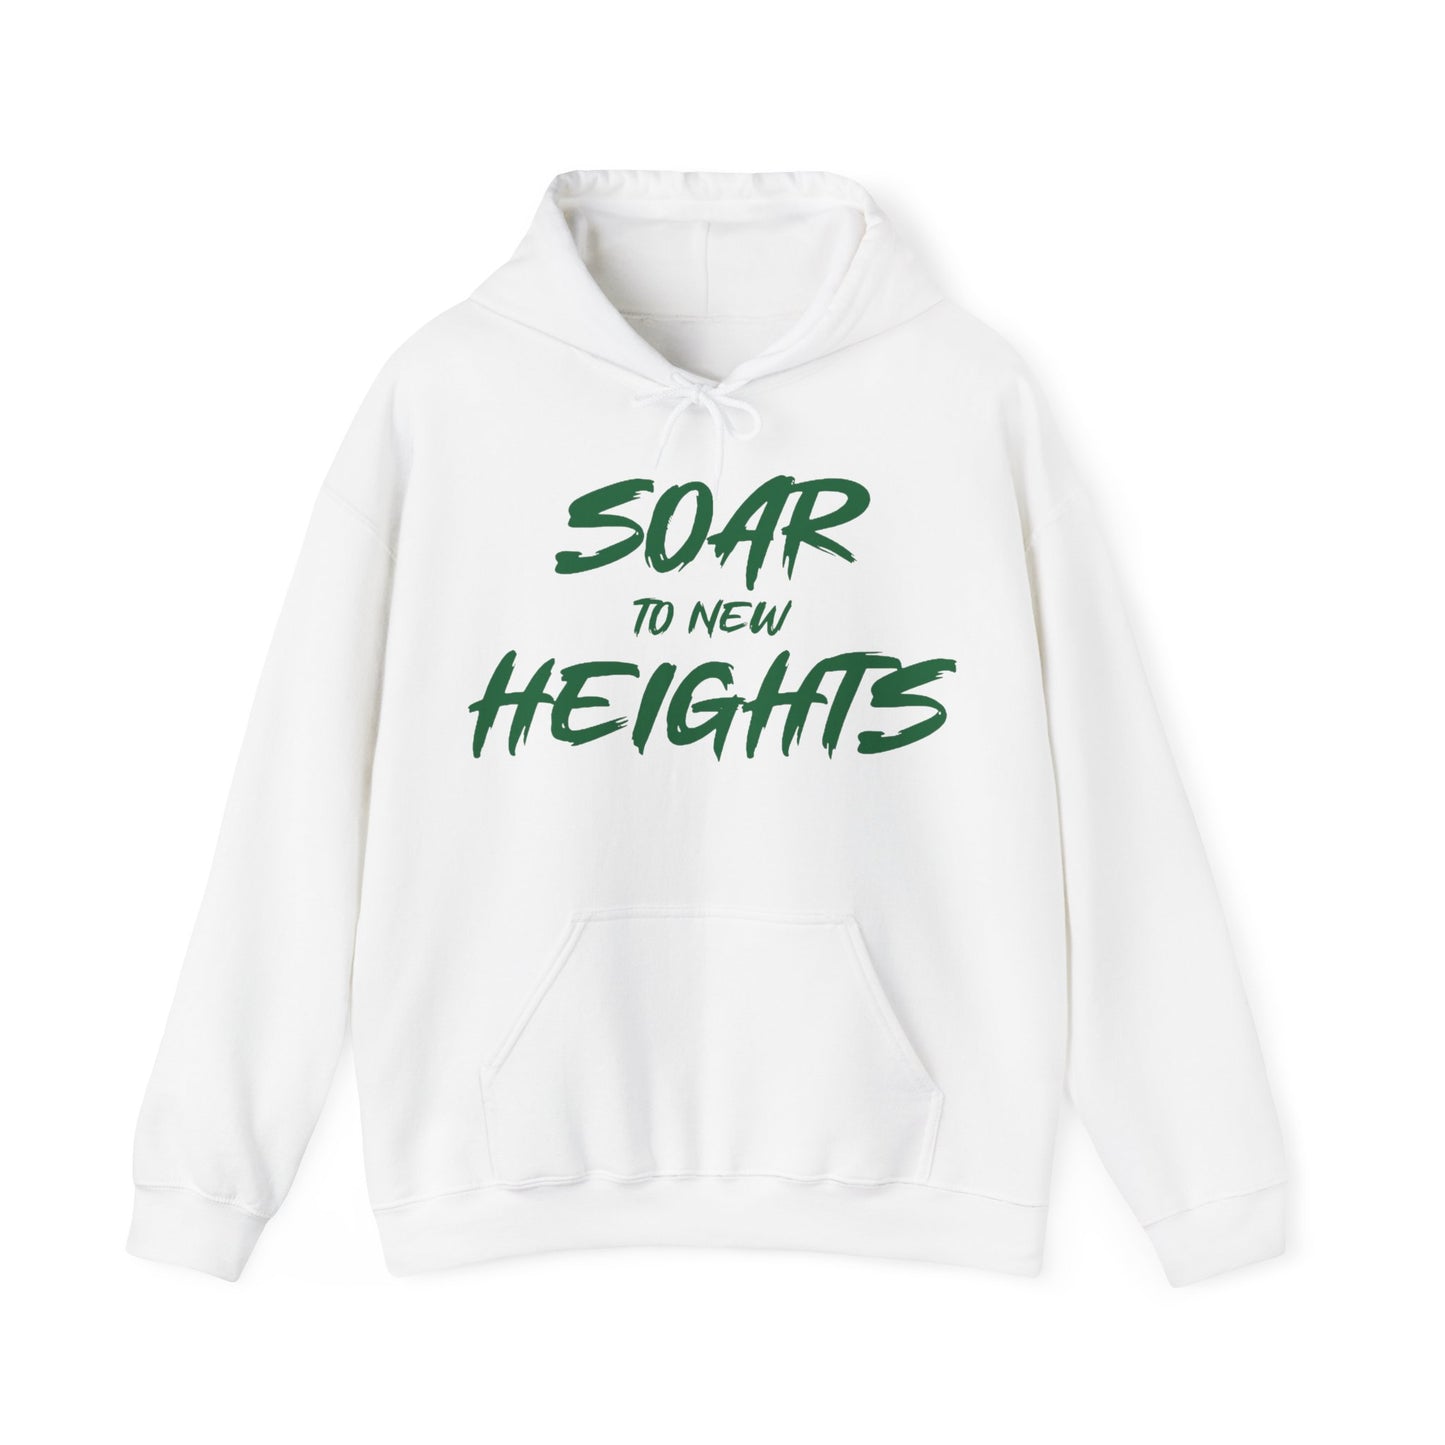 Soar To New Heights Hoodie - Adult